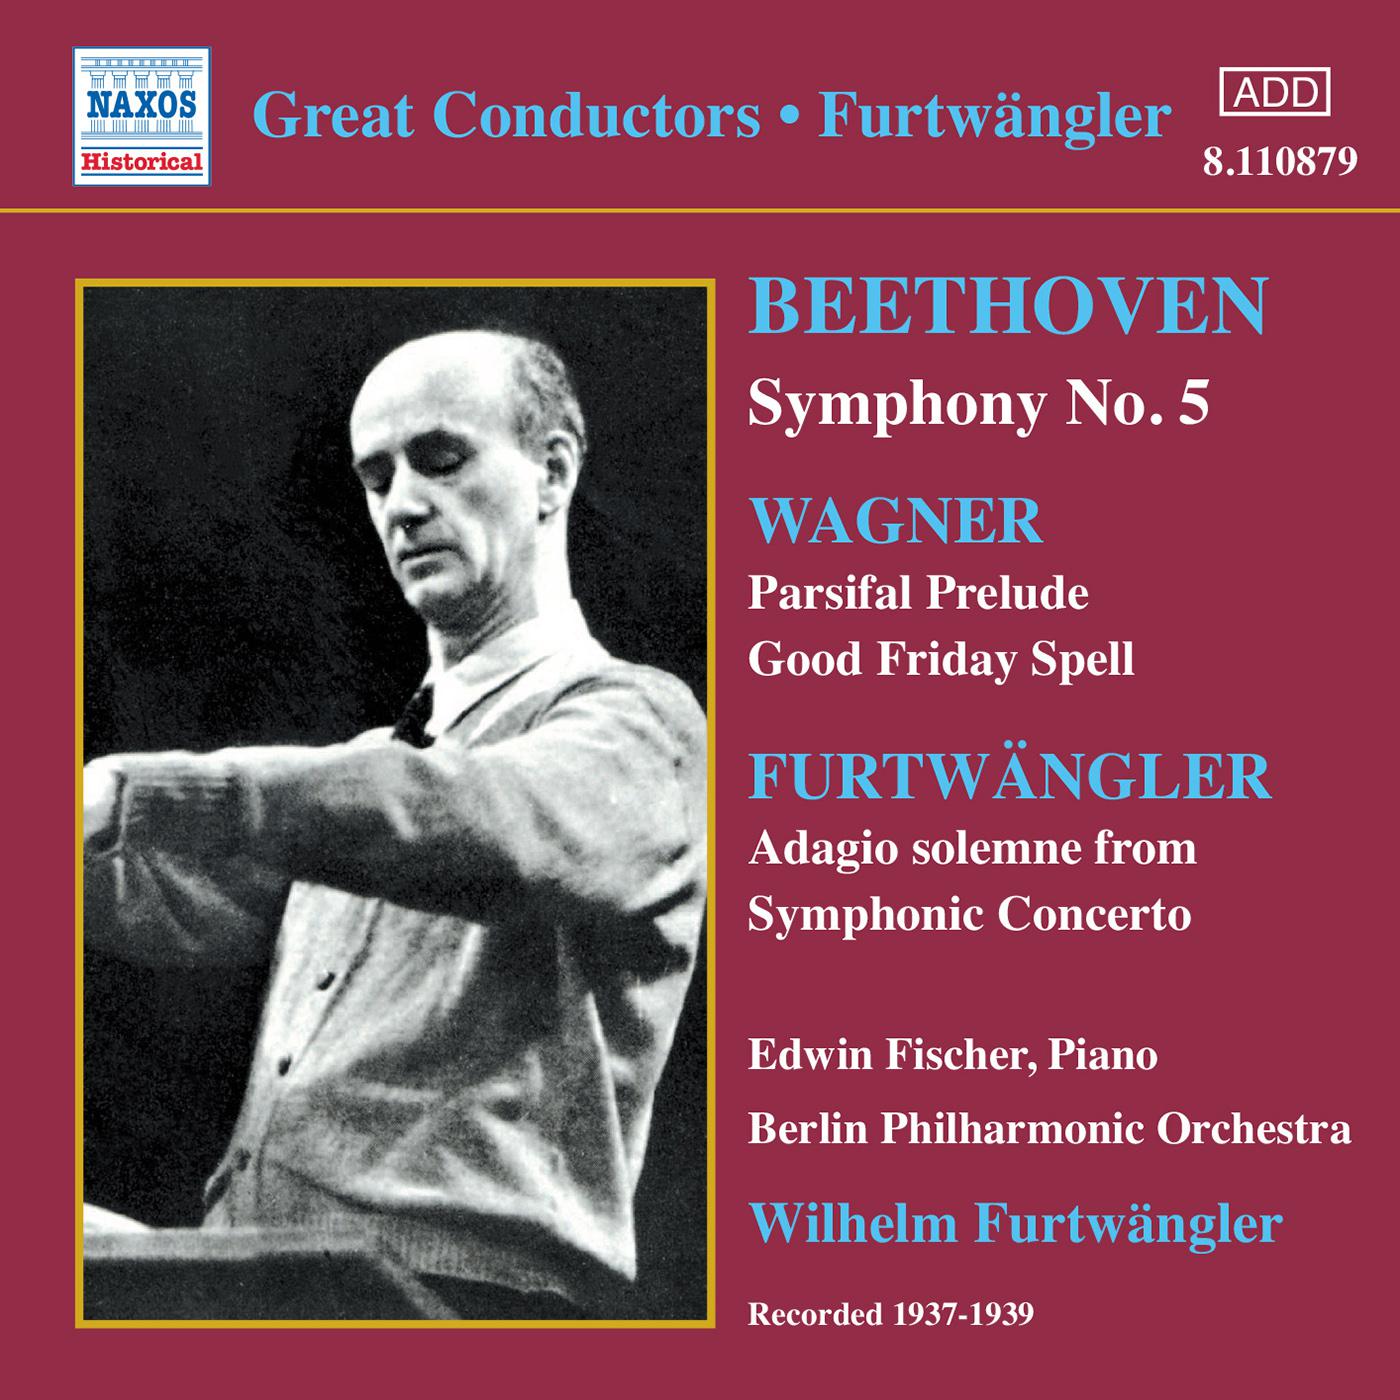 BEETHOVEN: Symphony No. 5 / WAGNER: Parsifal Prelude (Furtwangler) (1937-1939)